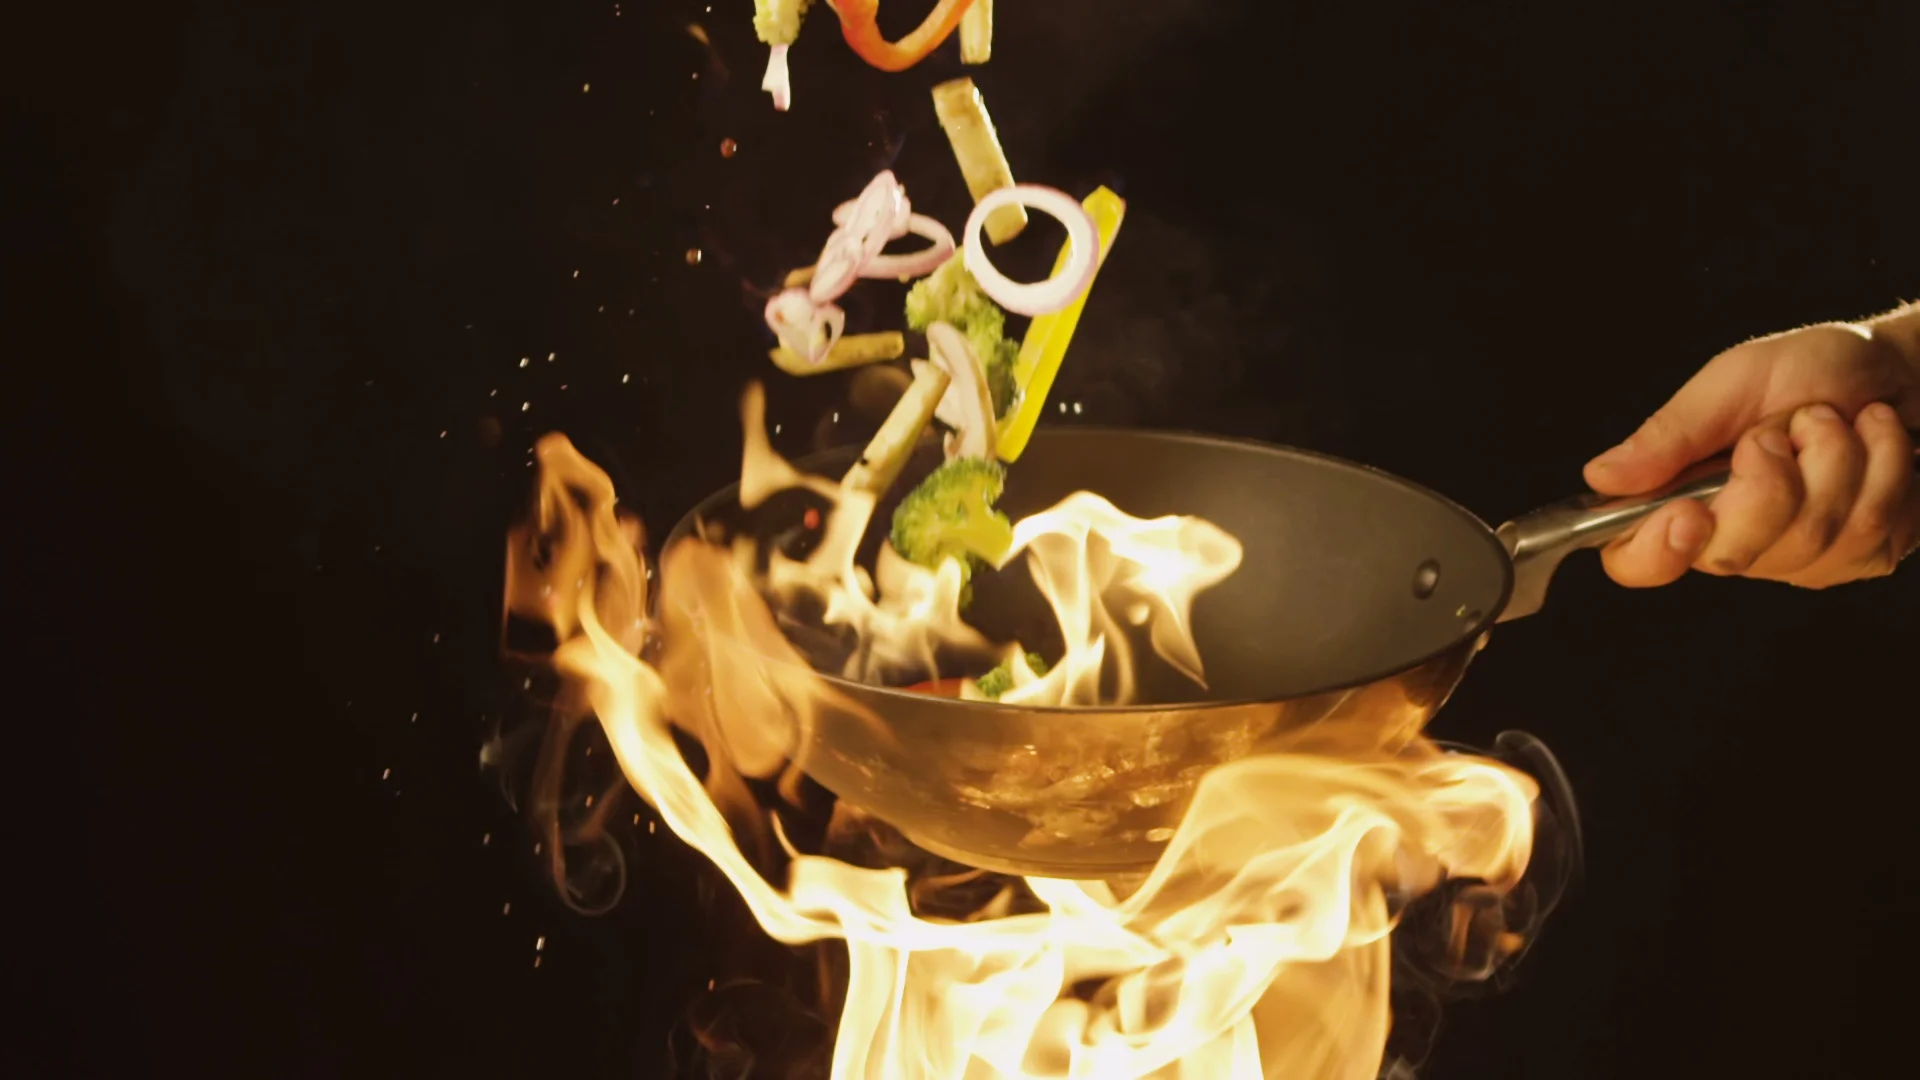 https://images.pond5.com/chef-frying-vegetables-fire-throwing-086752348_prevstill.jpeg